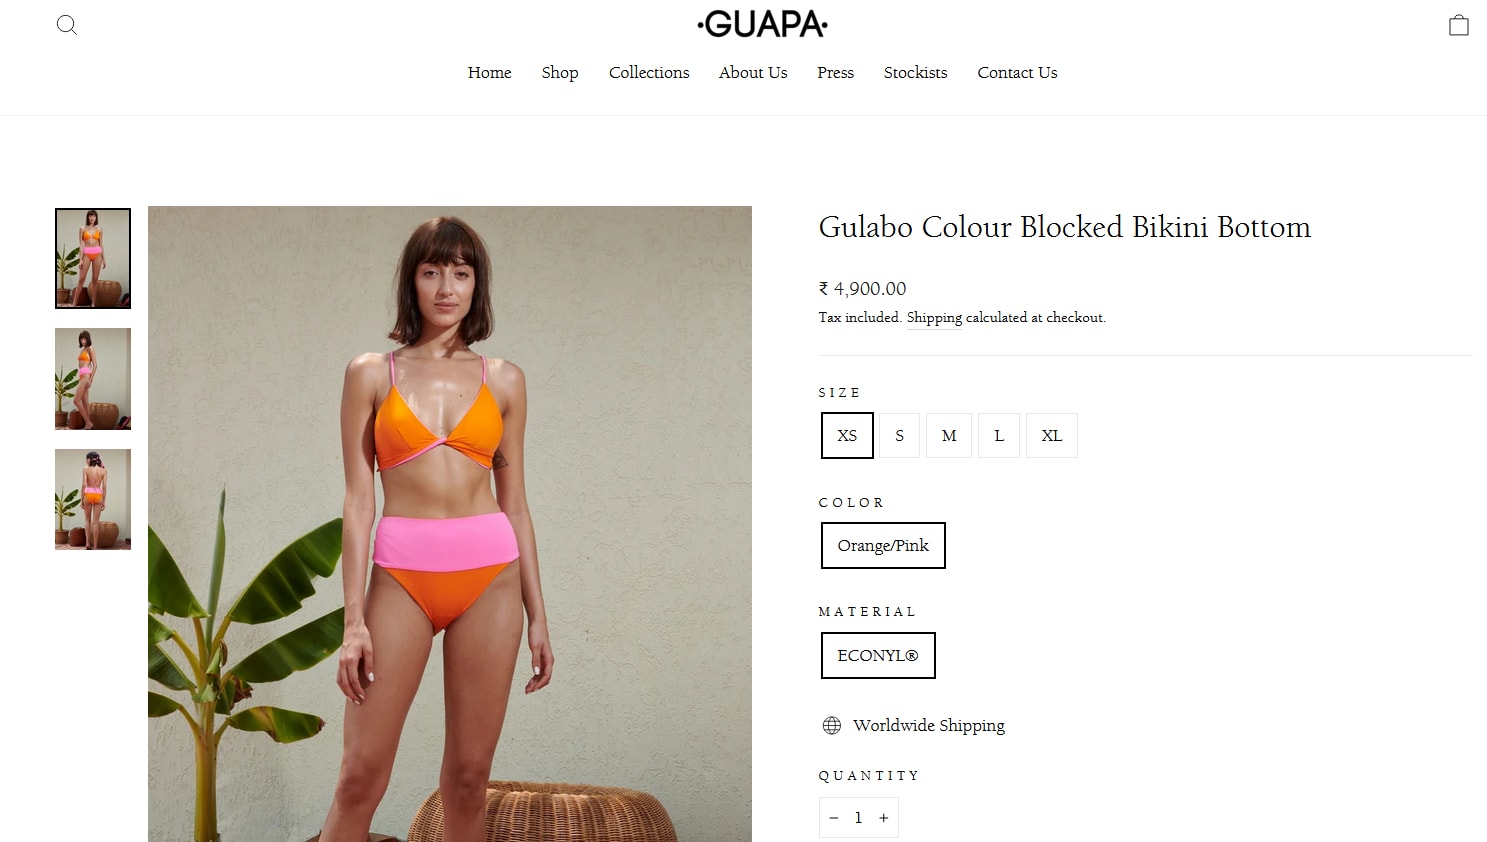 Sara Ali Khan's bikini bottom from Guapa(guaparesortwear.com)